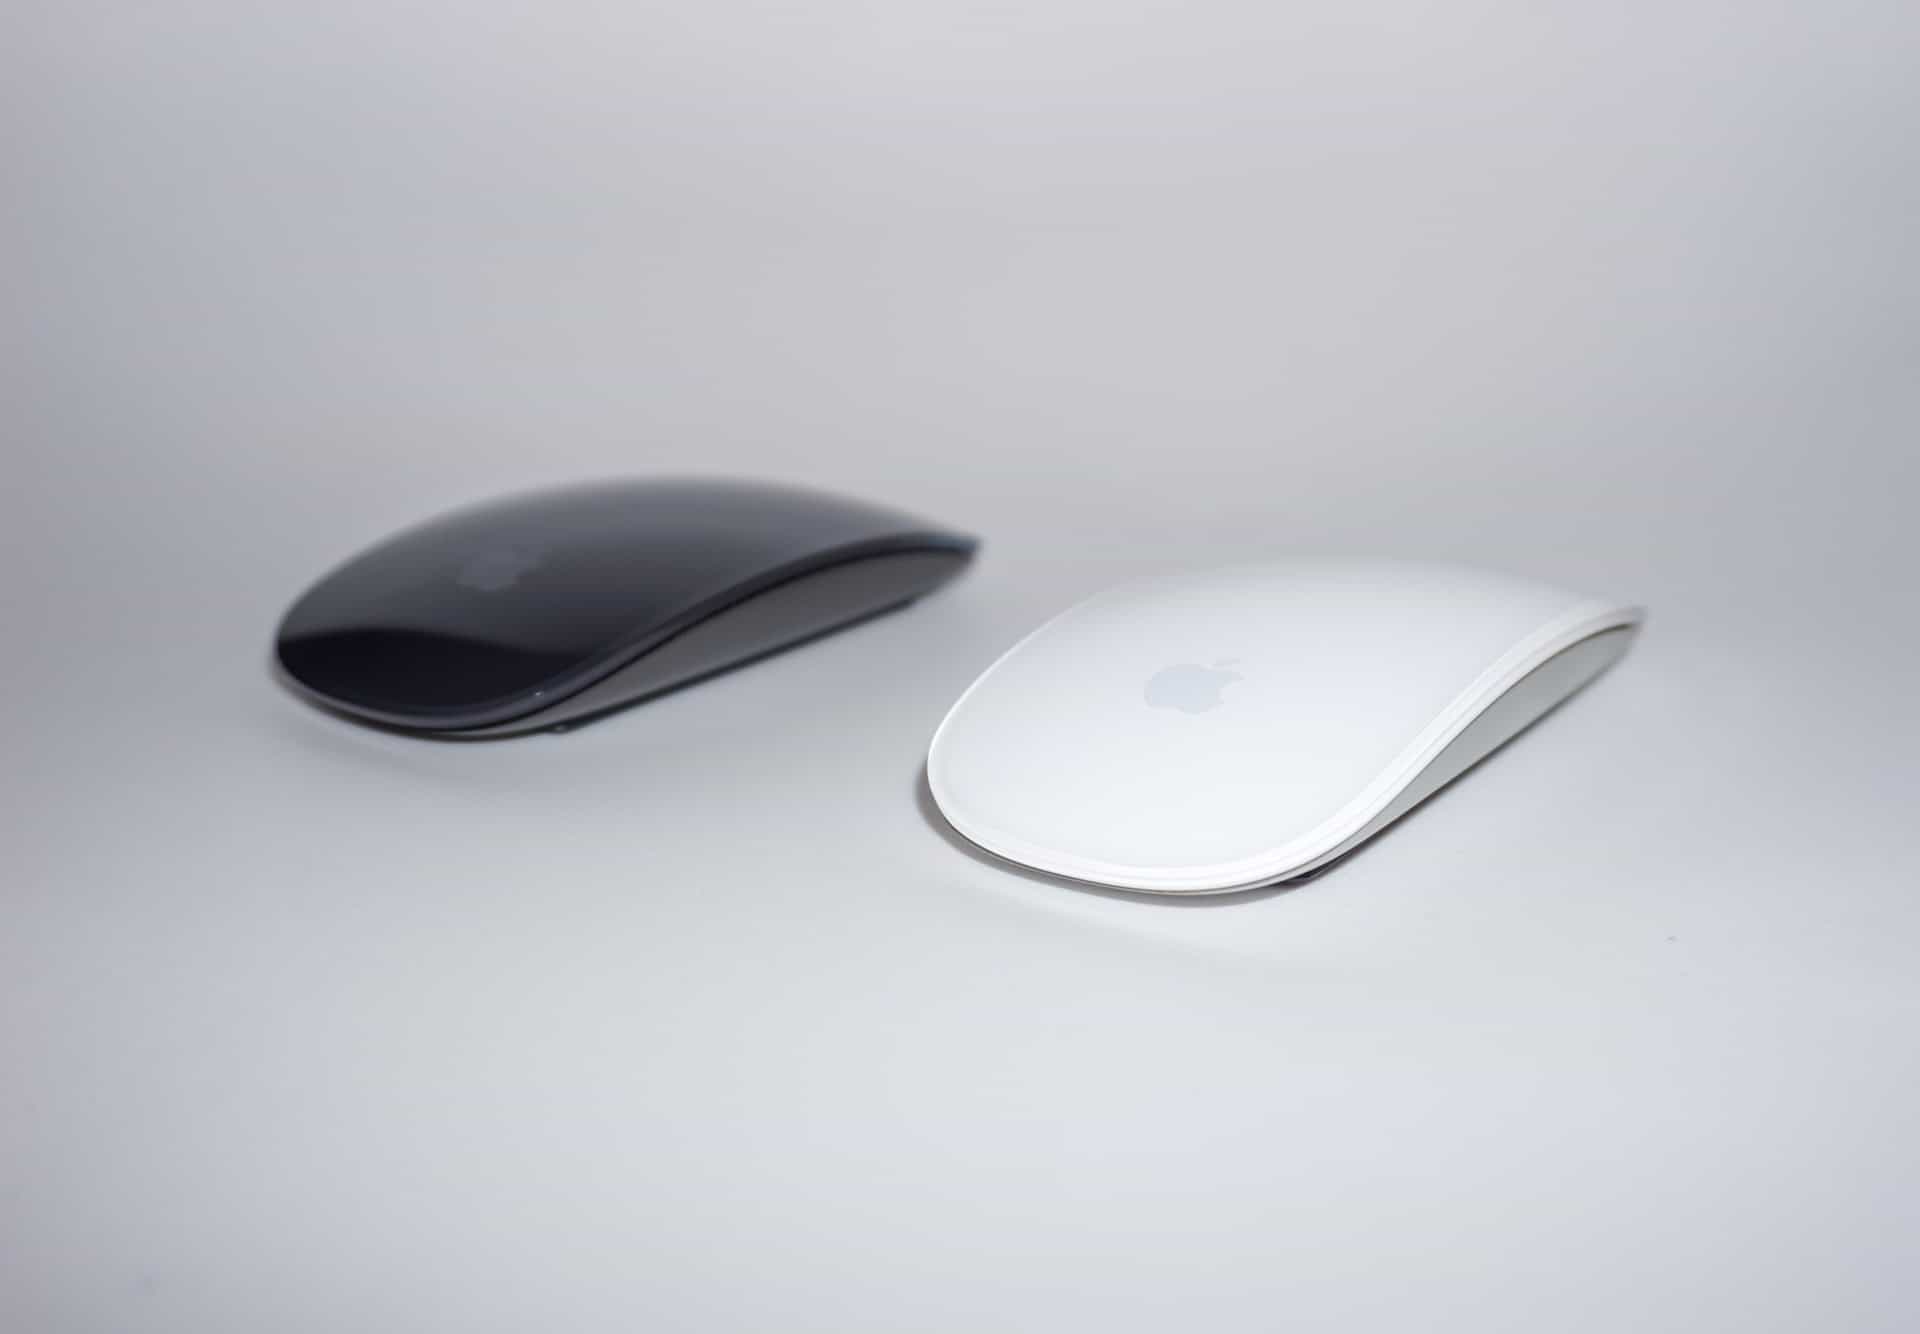 mouse acceleration mac